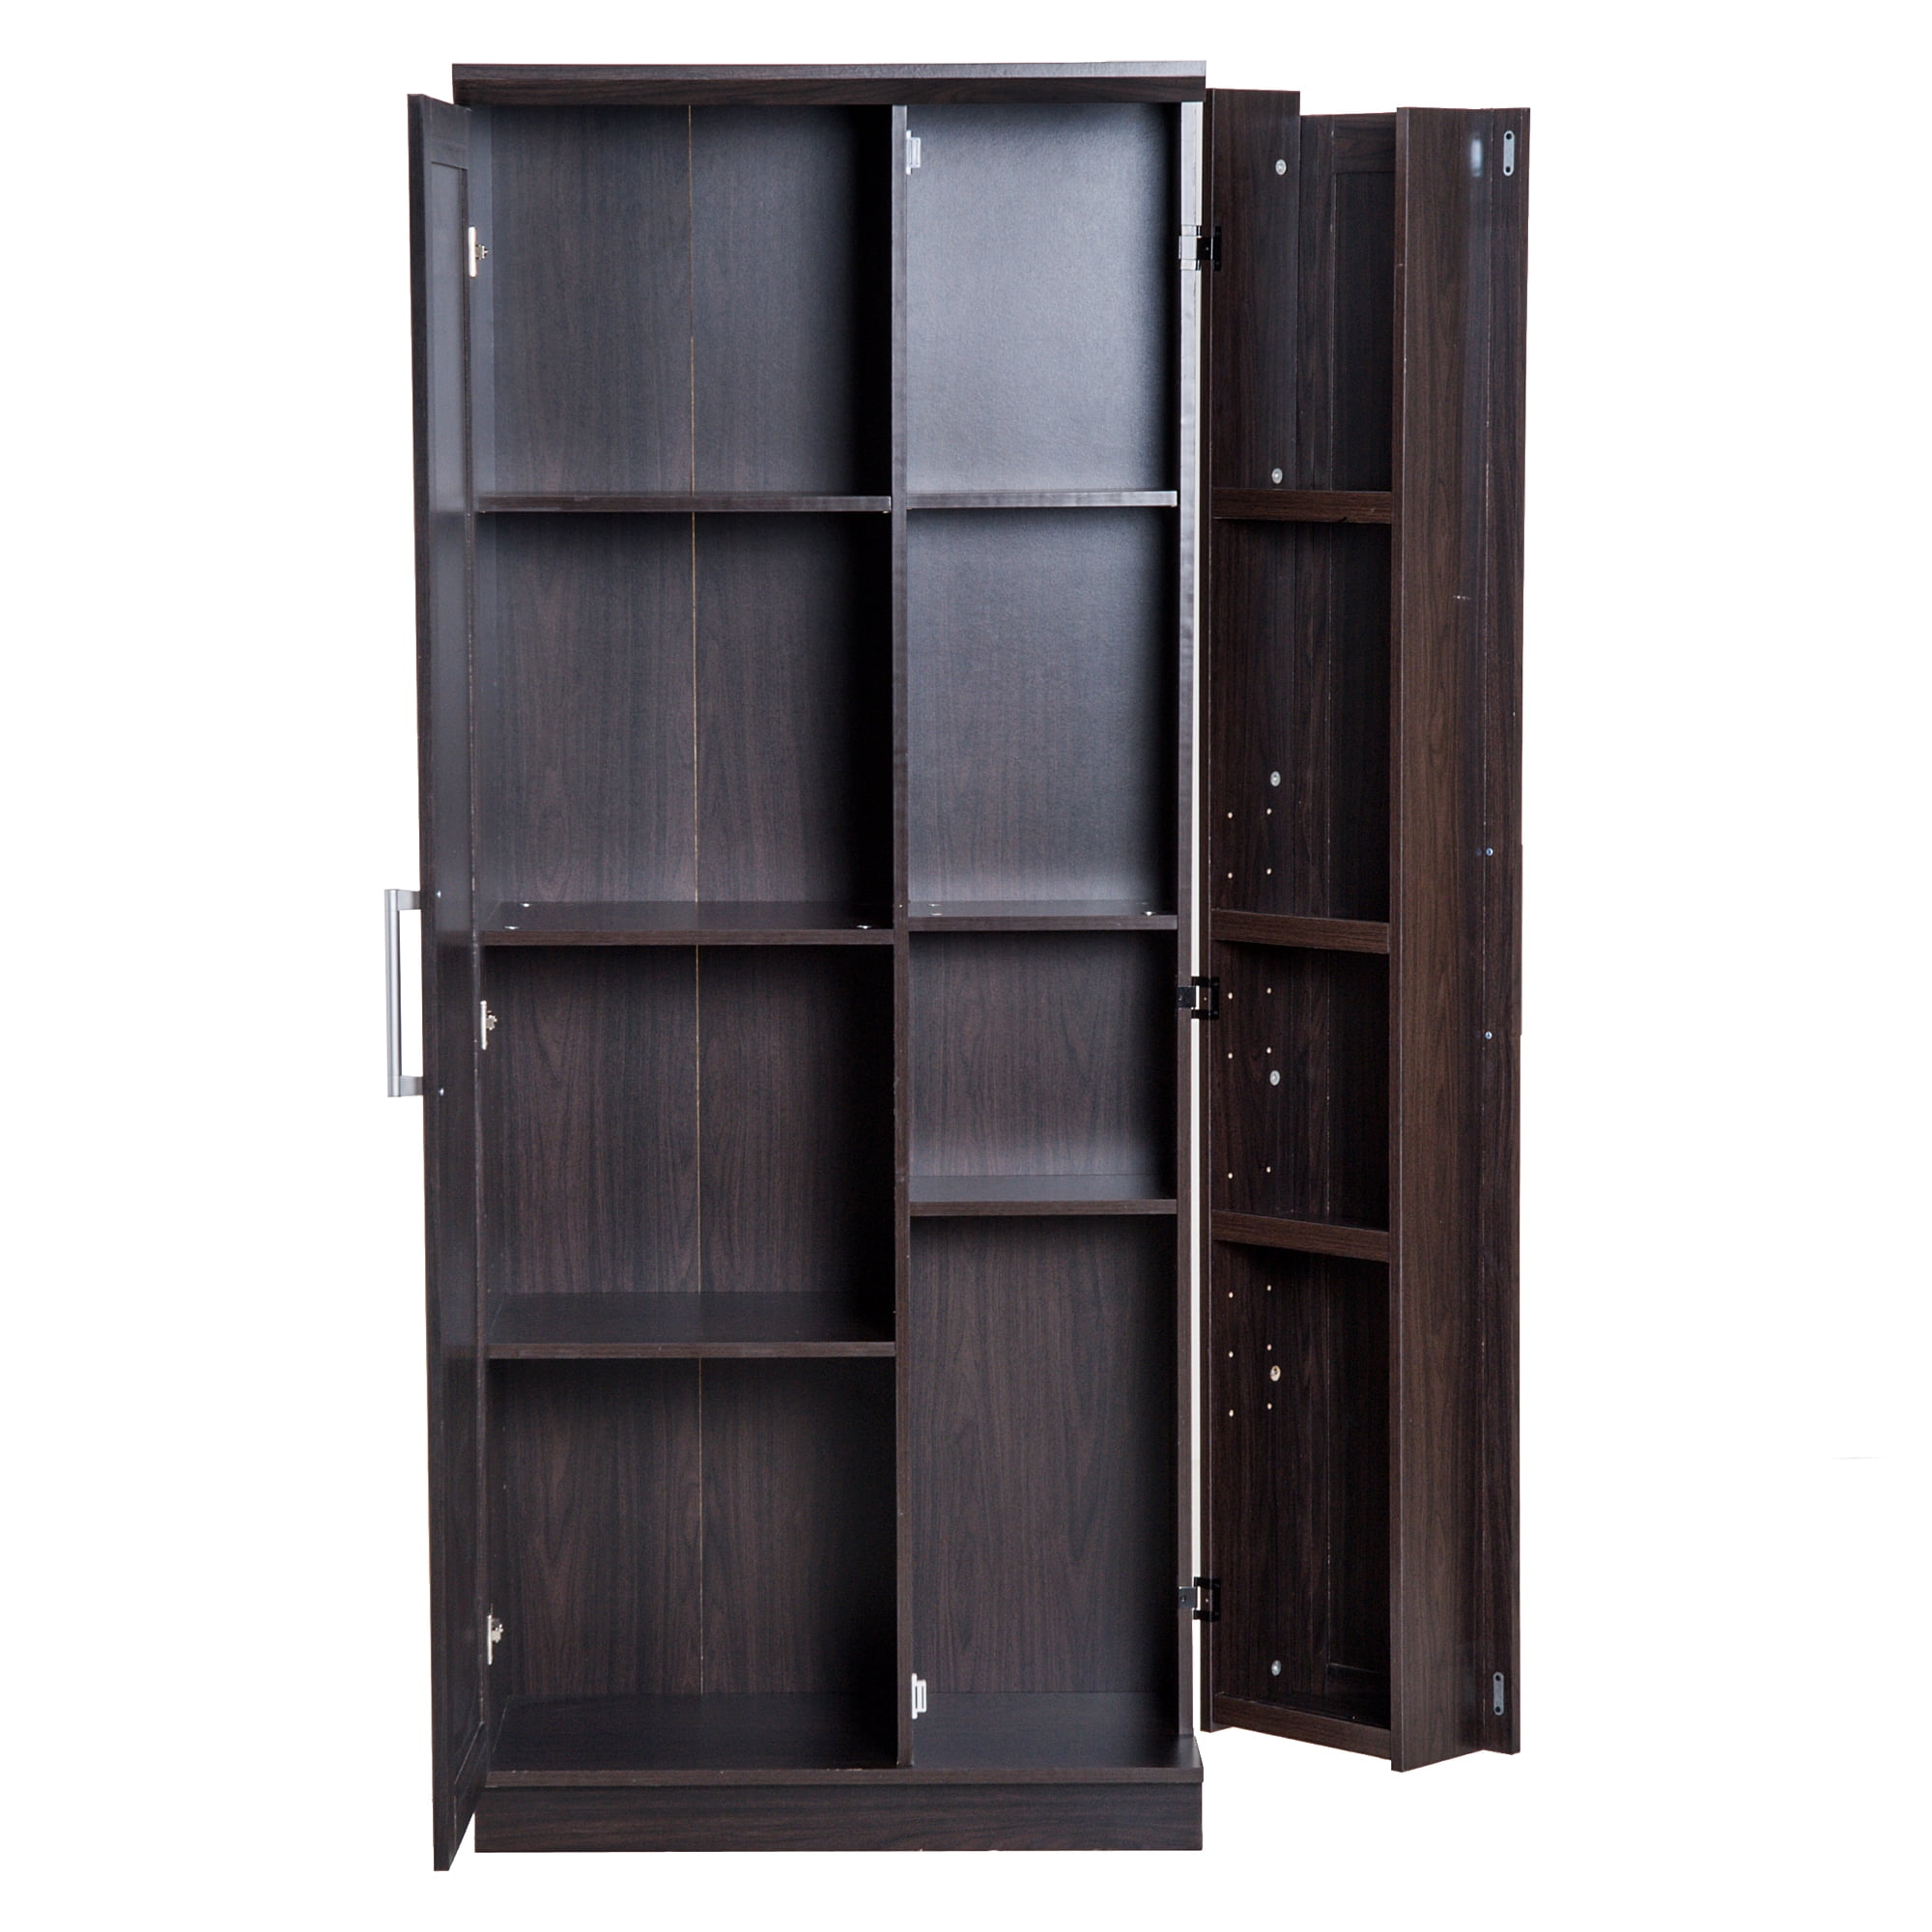 72" Wood Free Standing Kitchen Pantry Organizer Storage Cabinet - Black